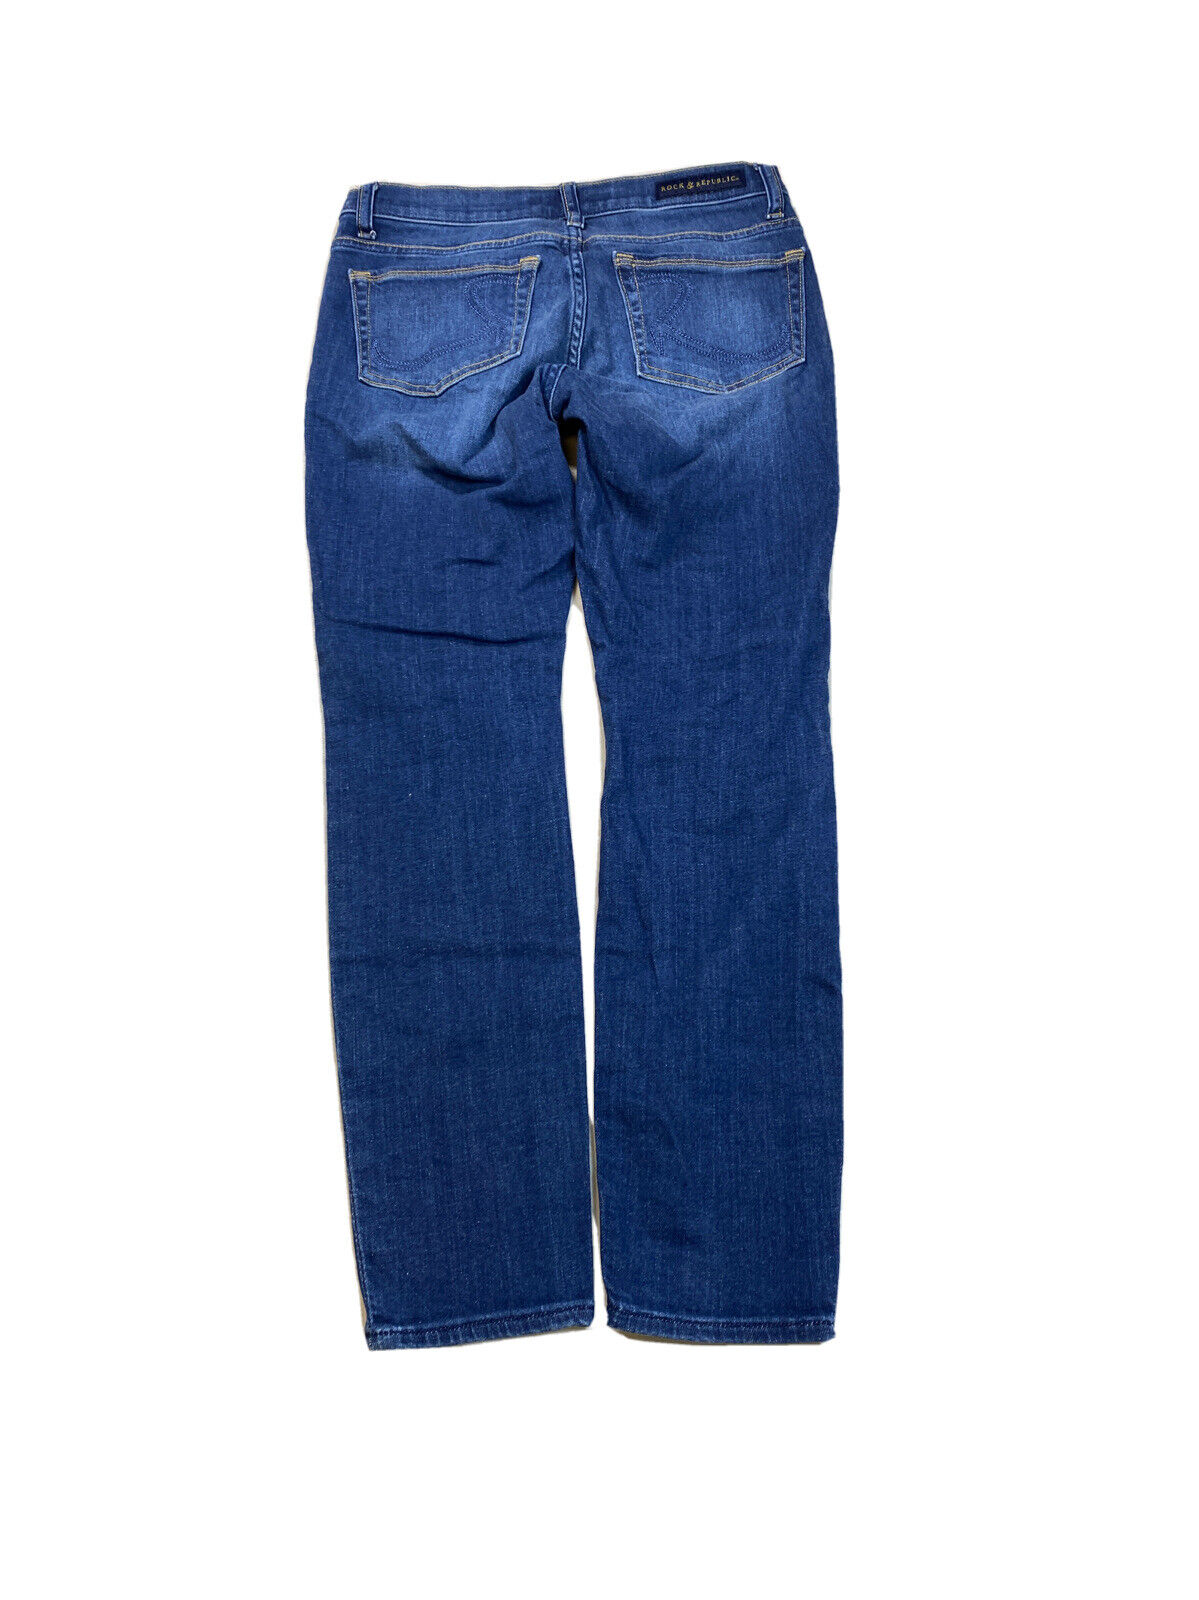 Rock and Republic Women's Medium Wash Kashmiere Crop Denim Jeans - 4